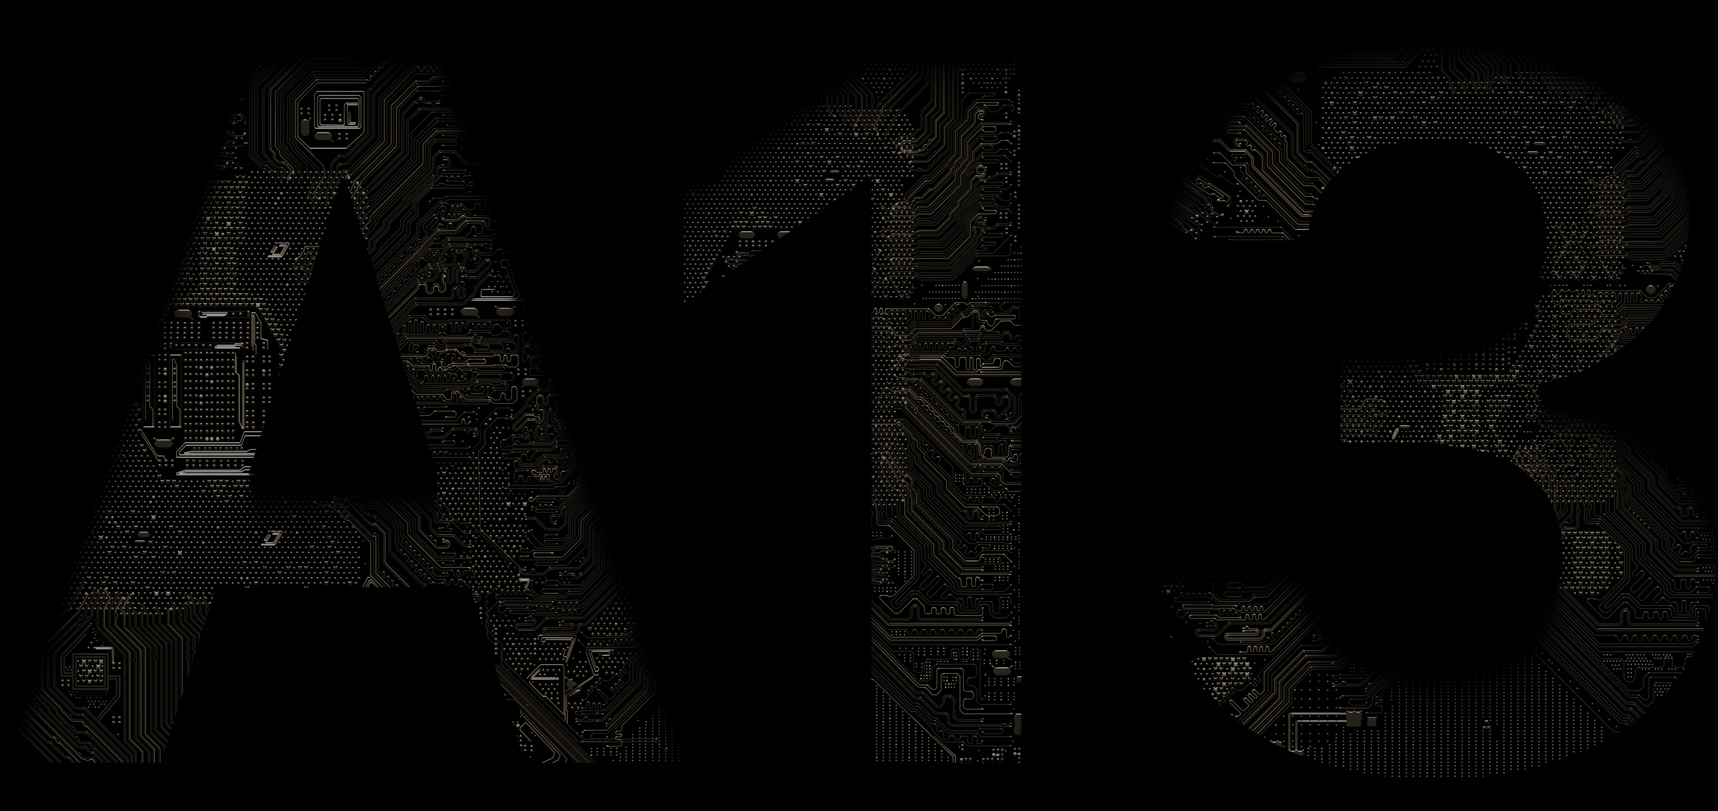 A13 logo image